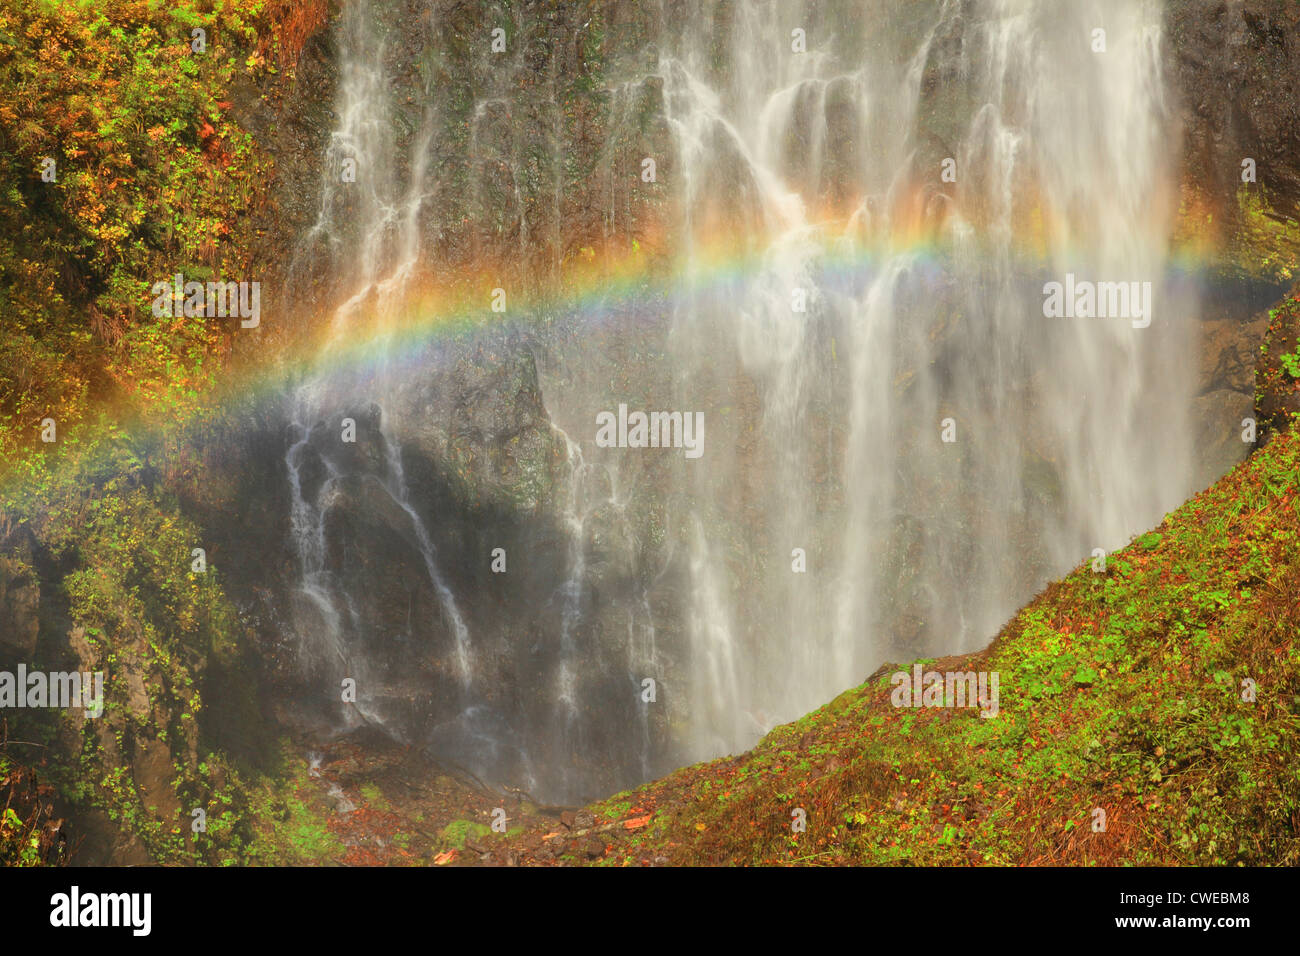 Rainbow e cascate, Moss rocce coperte Foto Stock